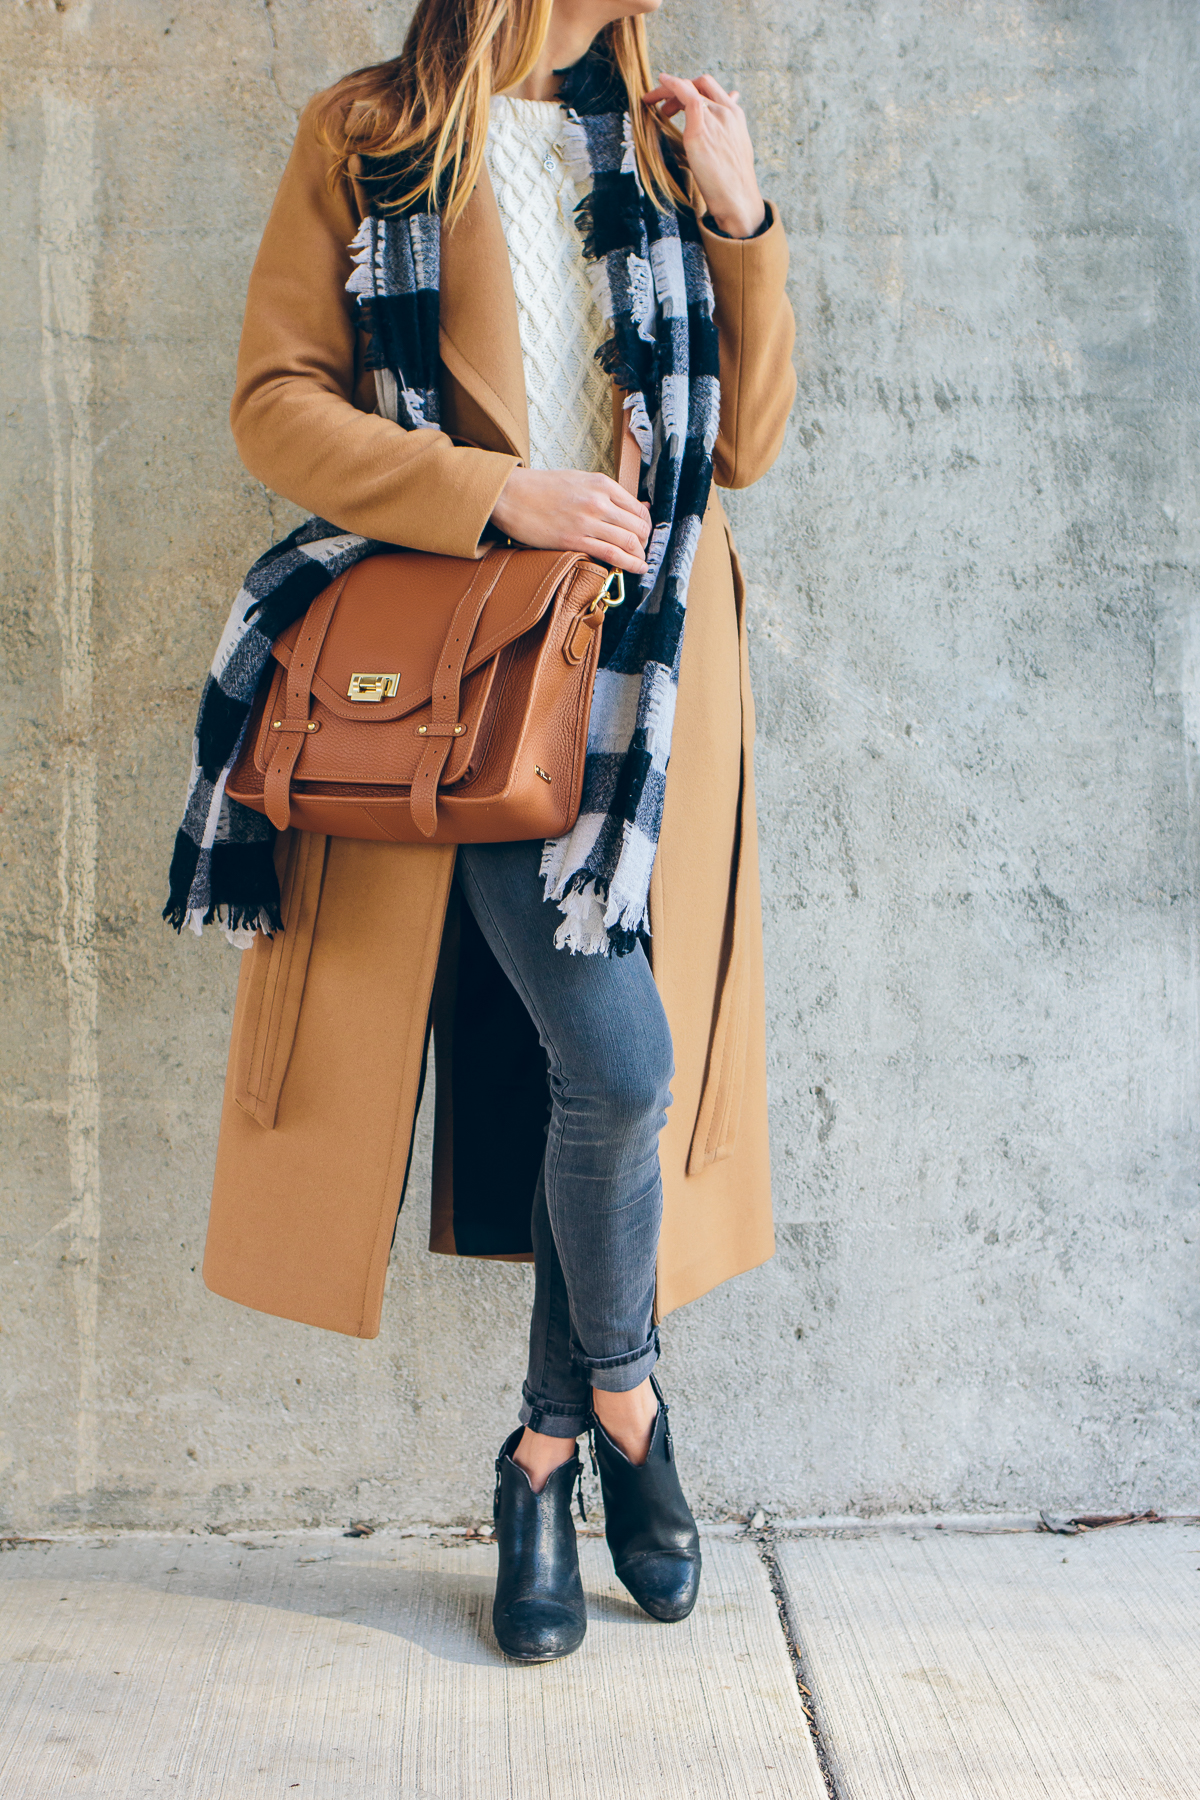 camel coat, gigi new york satchel, buffalo check scarf — via @TheFoxandShe